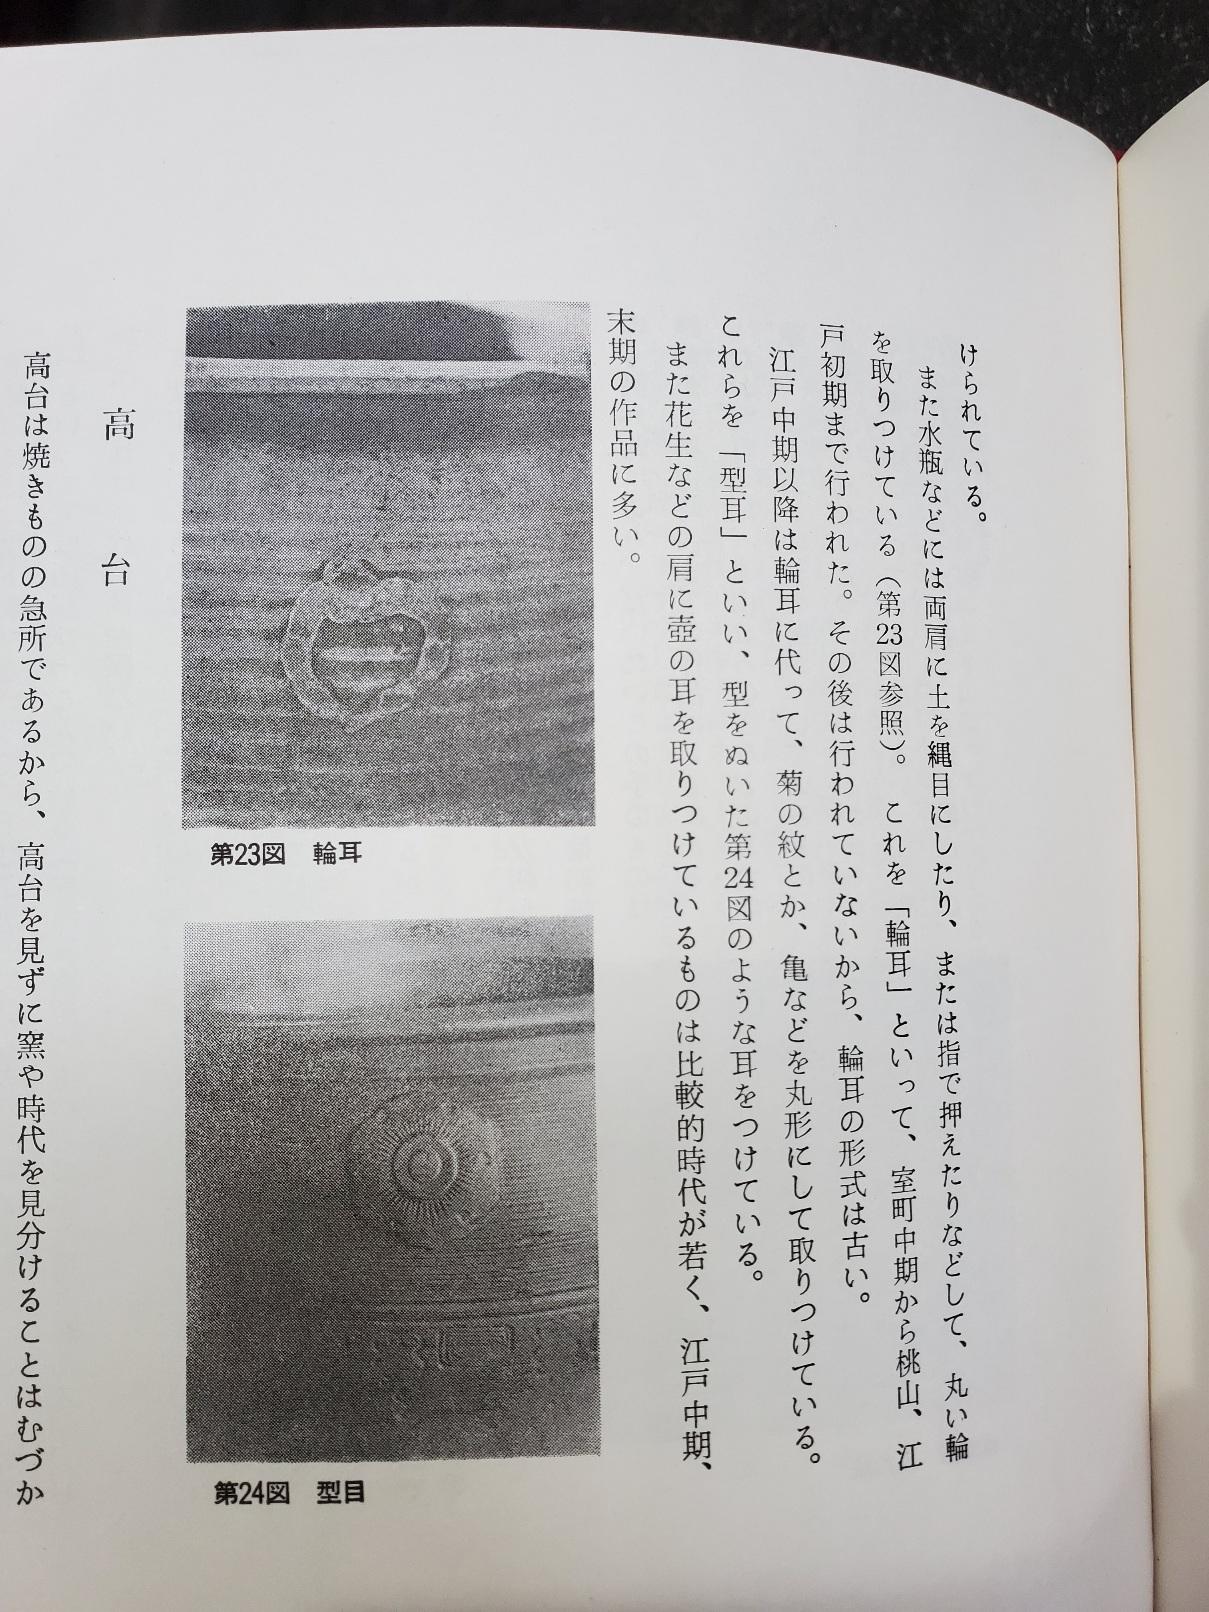 Japanese Antique Rare Pottery Jar / 1573-1700 / 